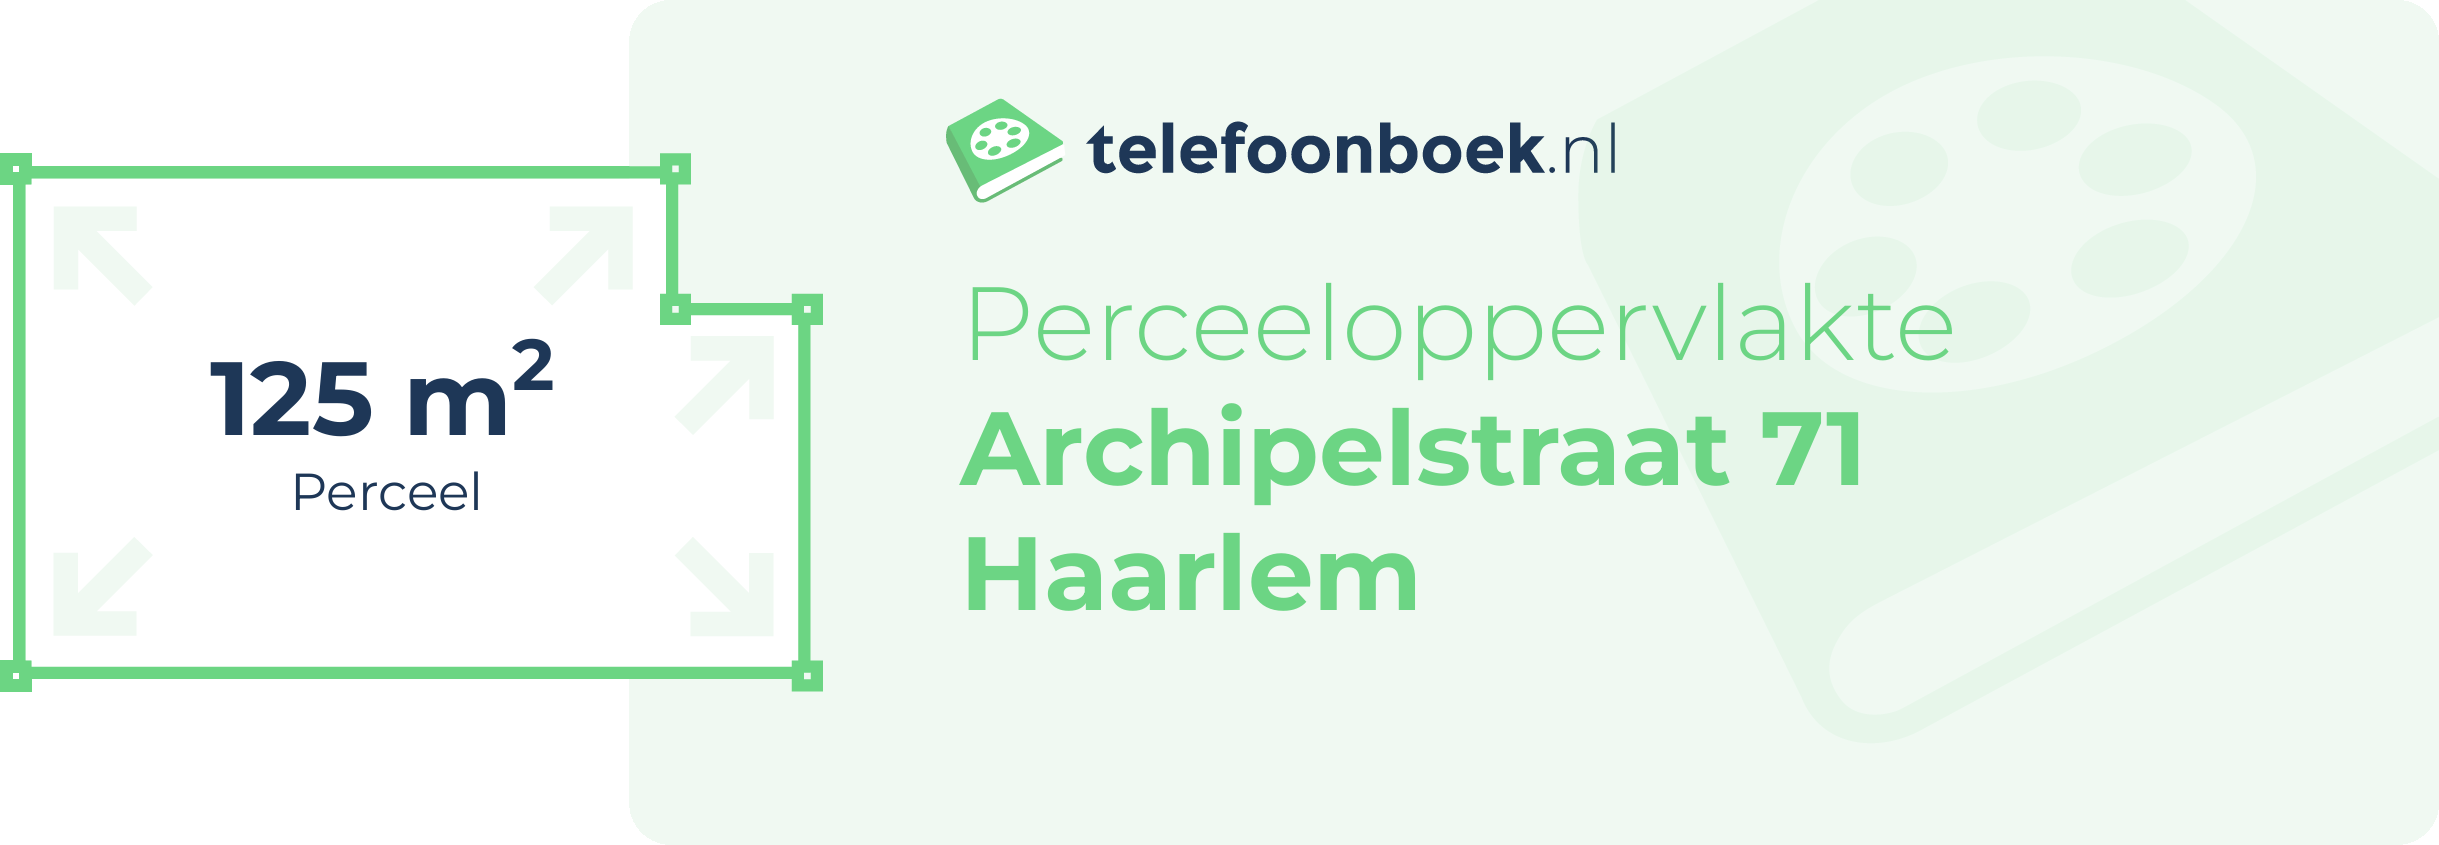 Perceeloppervlakte Archipelstraat 71 Haarlem